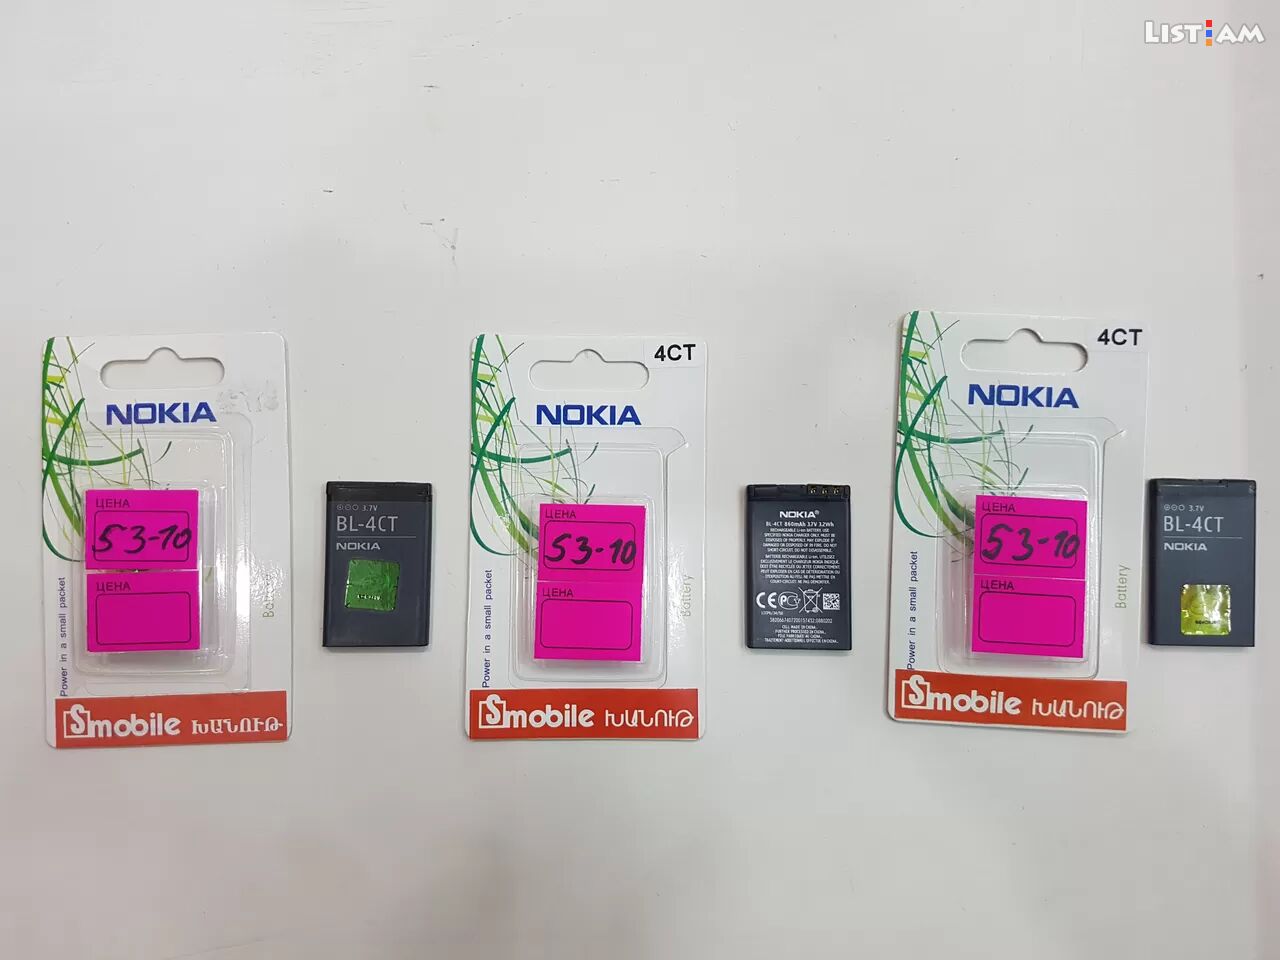 Nokia 5310 battery